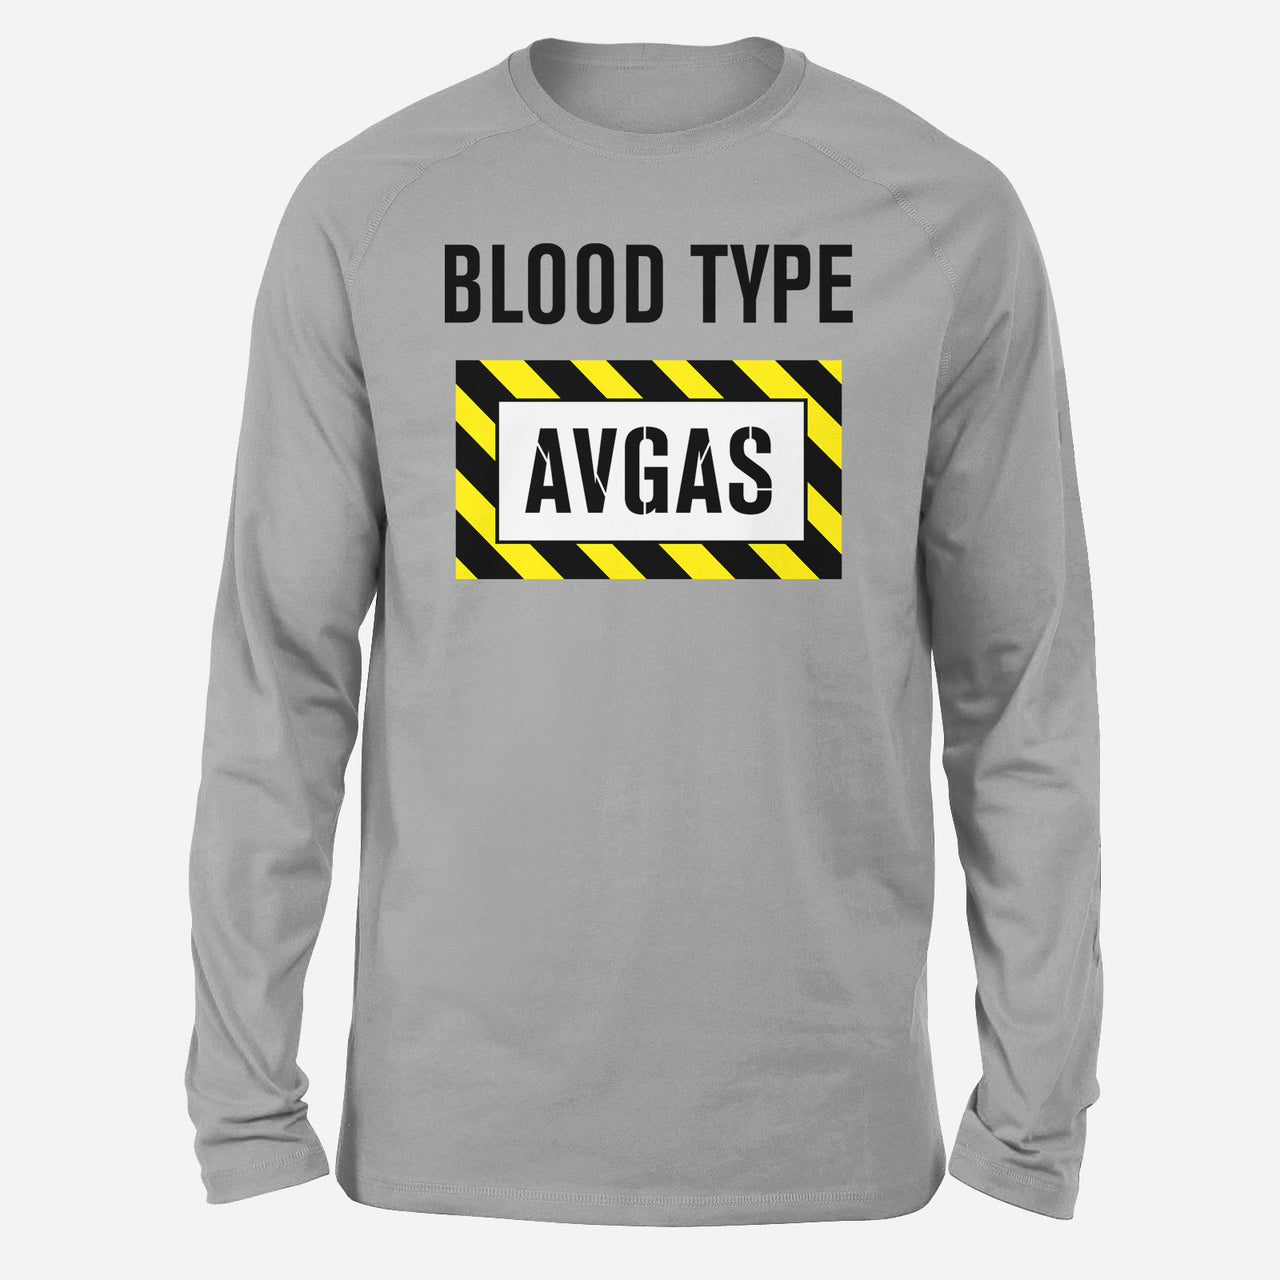 Blood Type AVGAS Designed Long-Sleeve T-Shirts